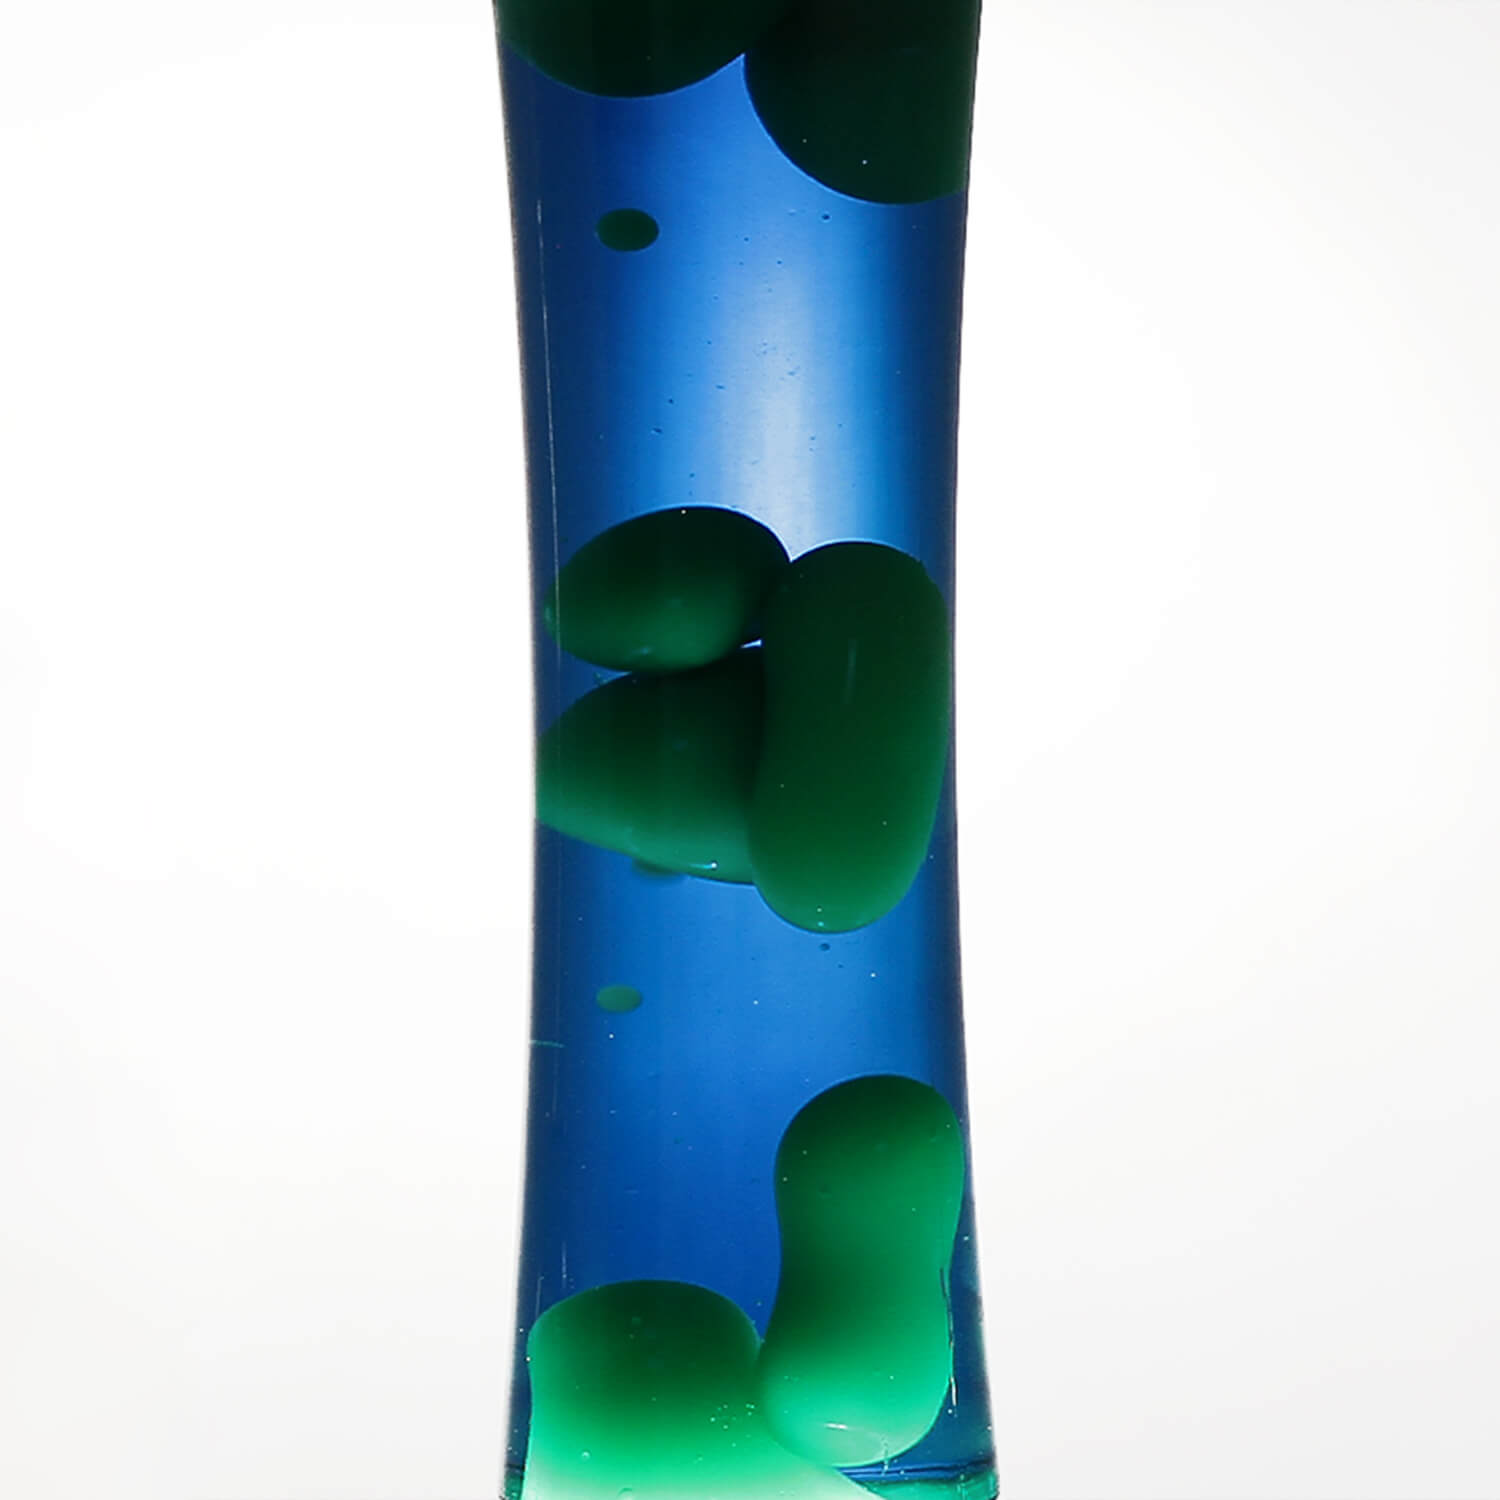 Retro Lavalampe Blau Grün 39cm stimmungsvoll SANDRO